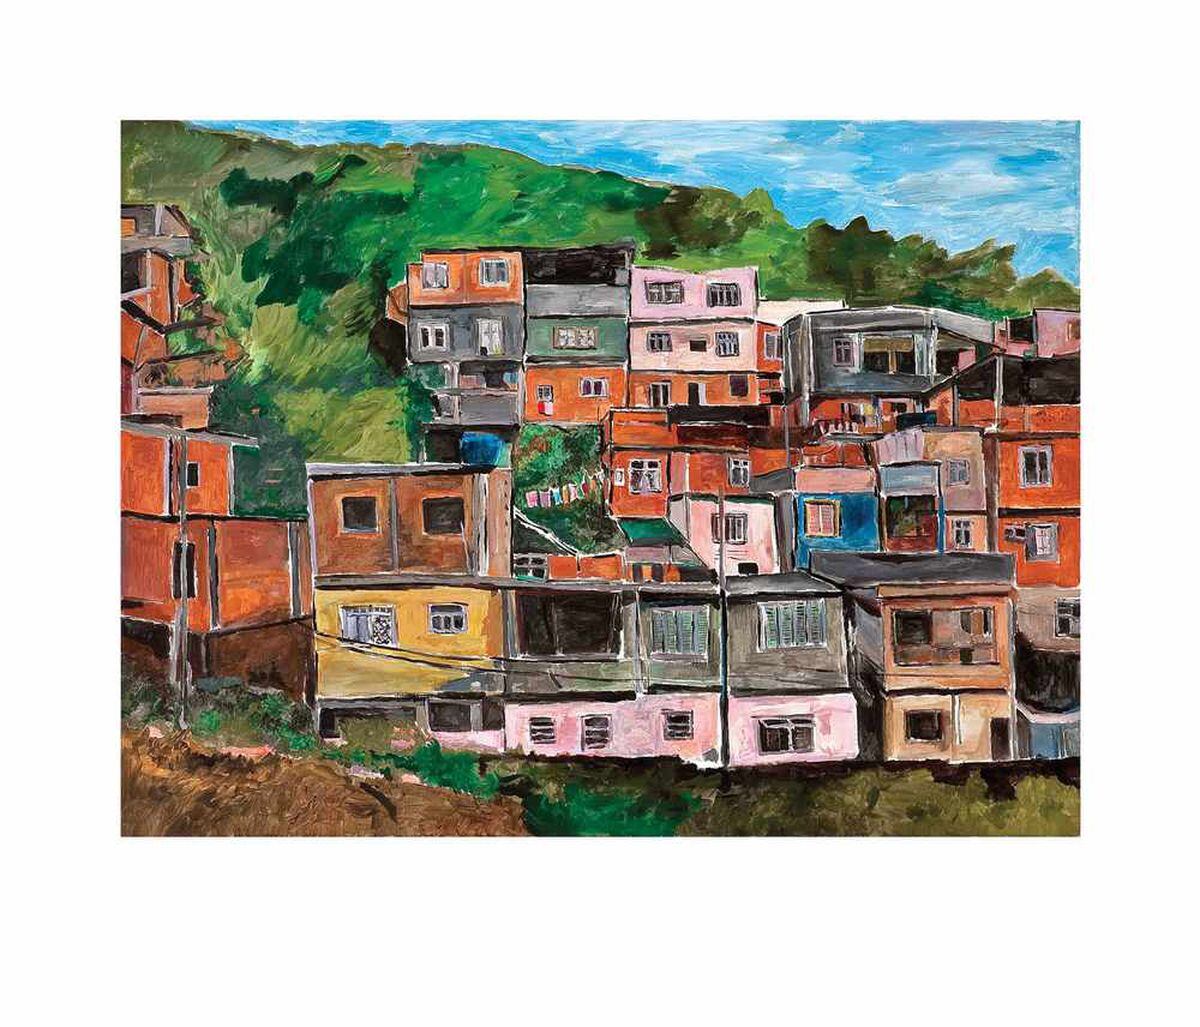 'Favela Villa Candido' shows off Dylan's colourful imagination